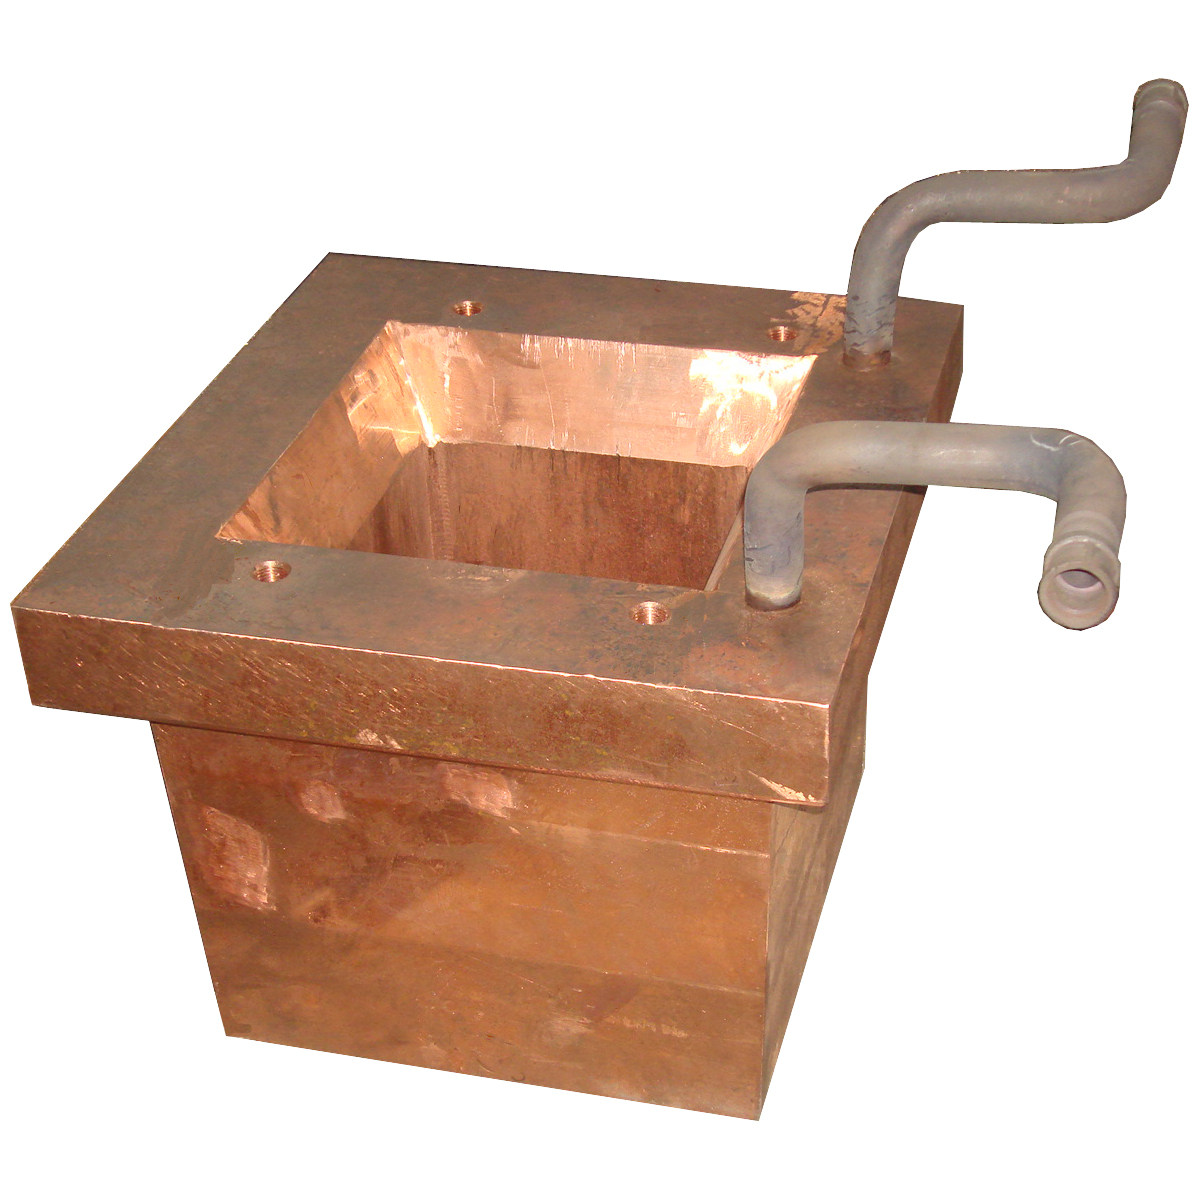 Flash furnace copper cooling element